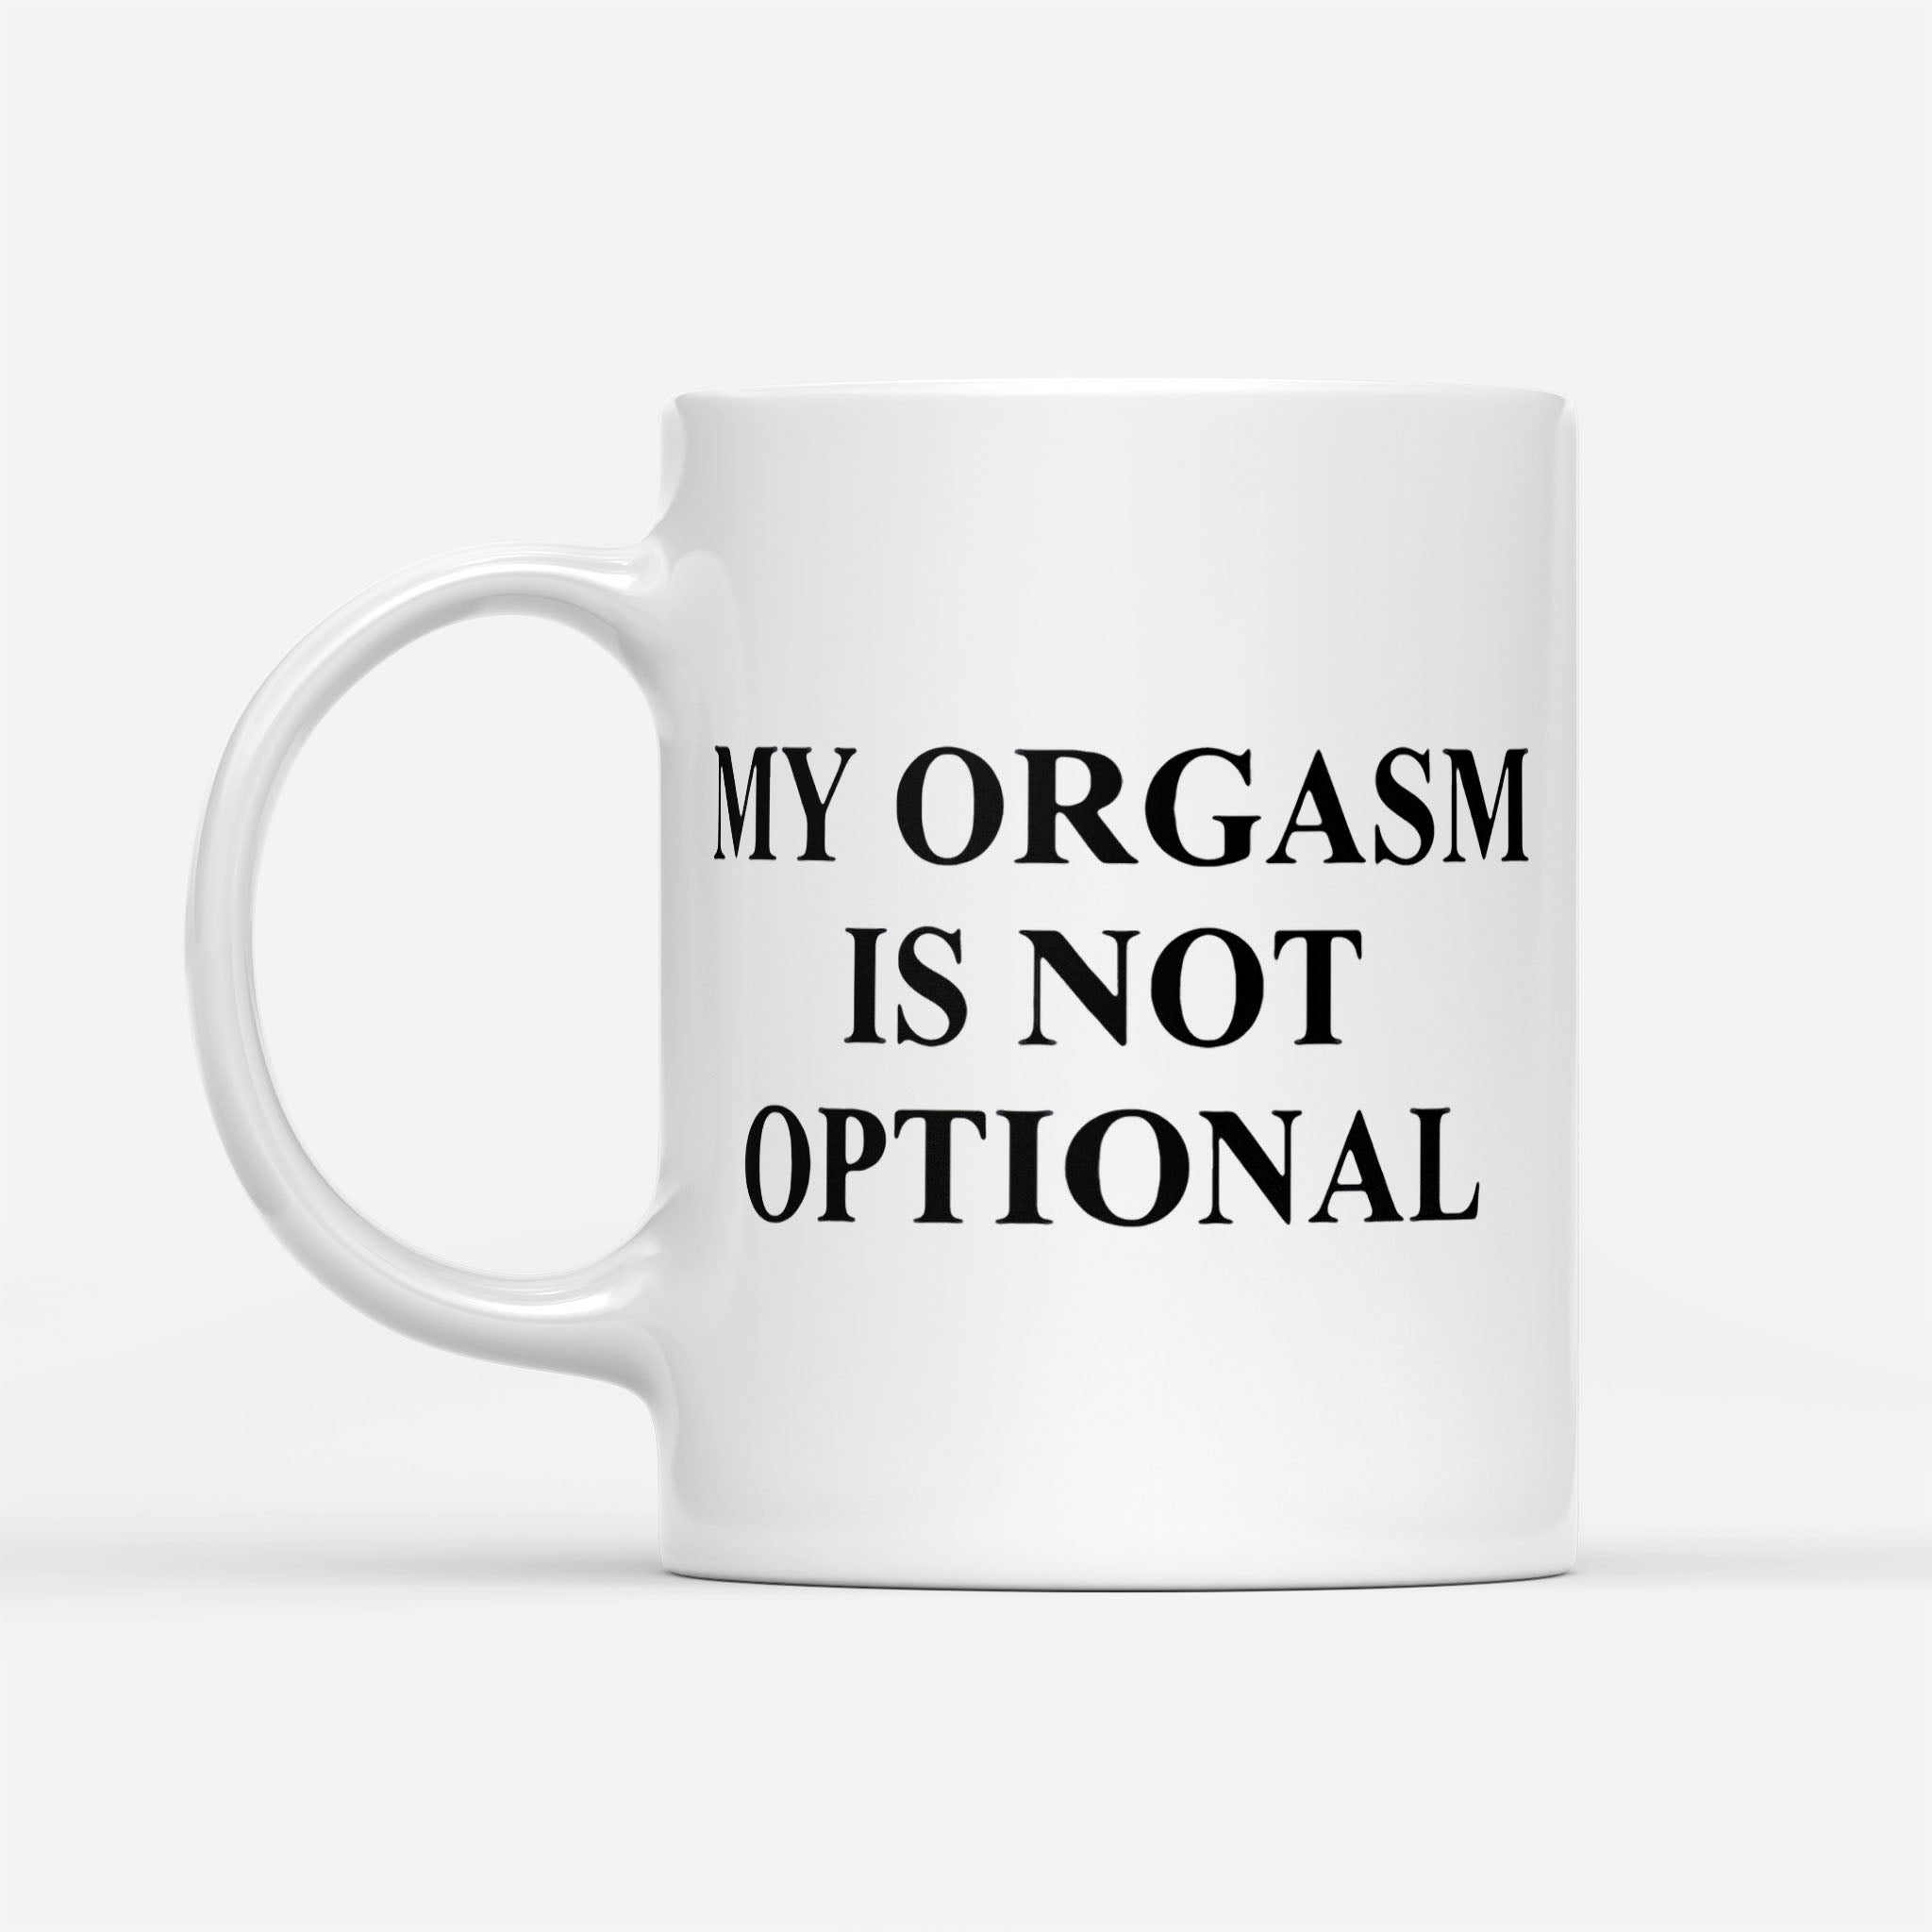 My Orgasm Is Not Optional 2020 - White Mug